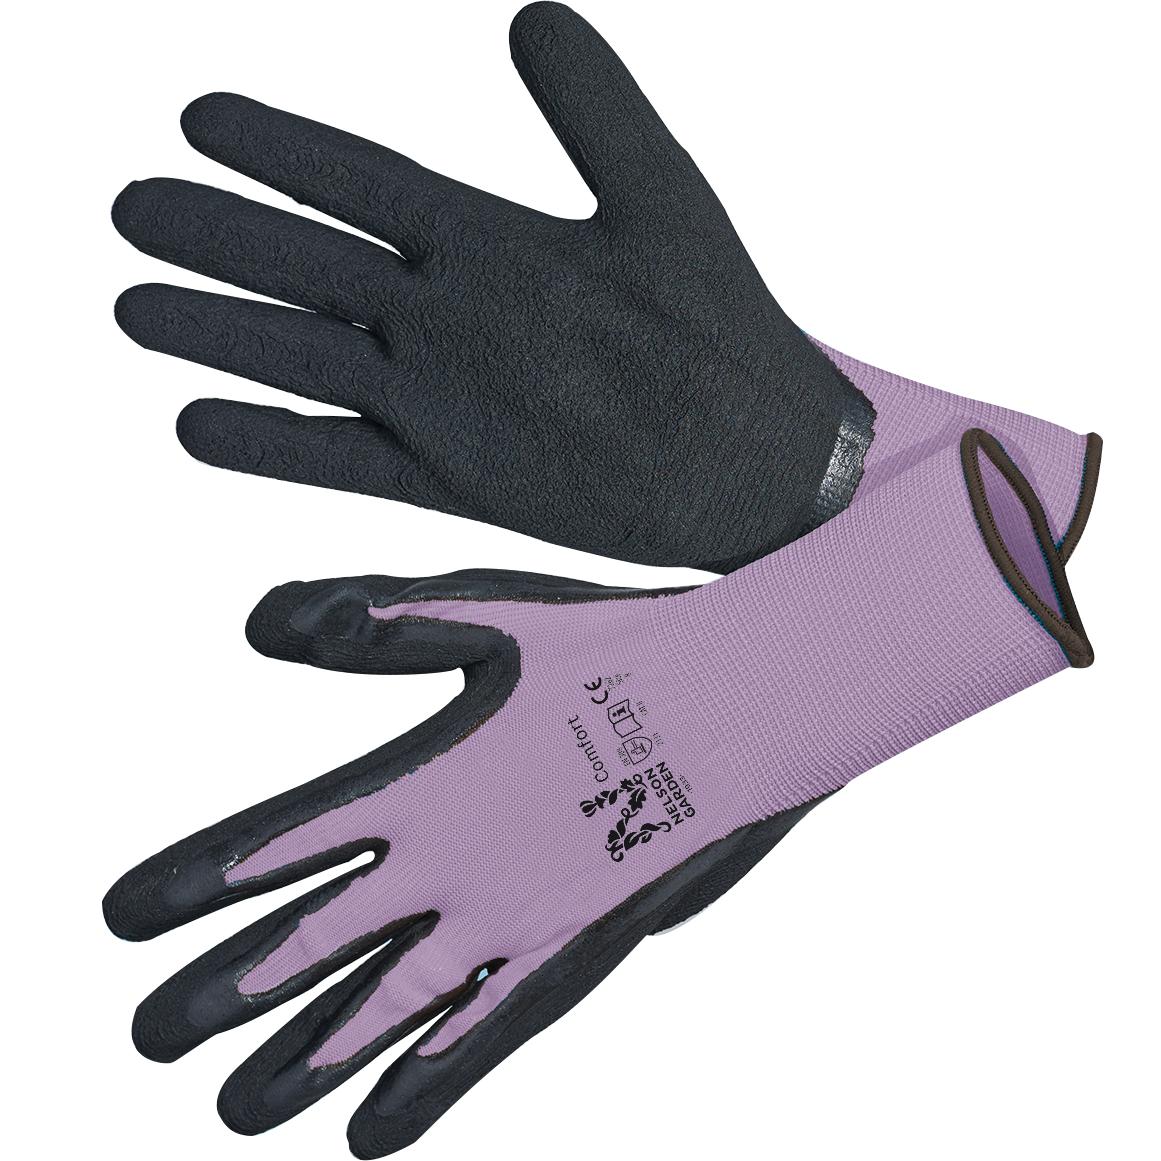 Handske Comfort, violett/svart stl 7